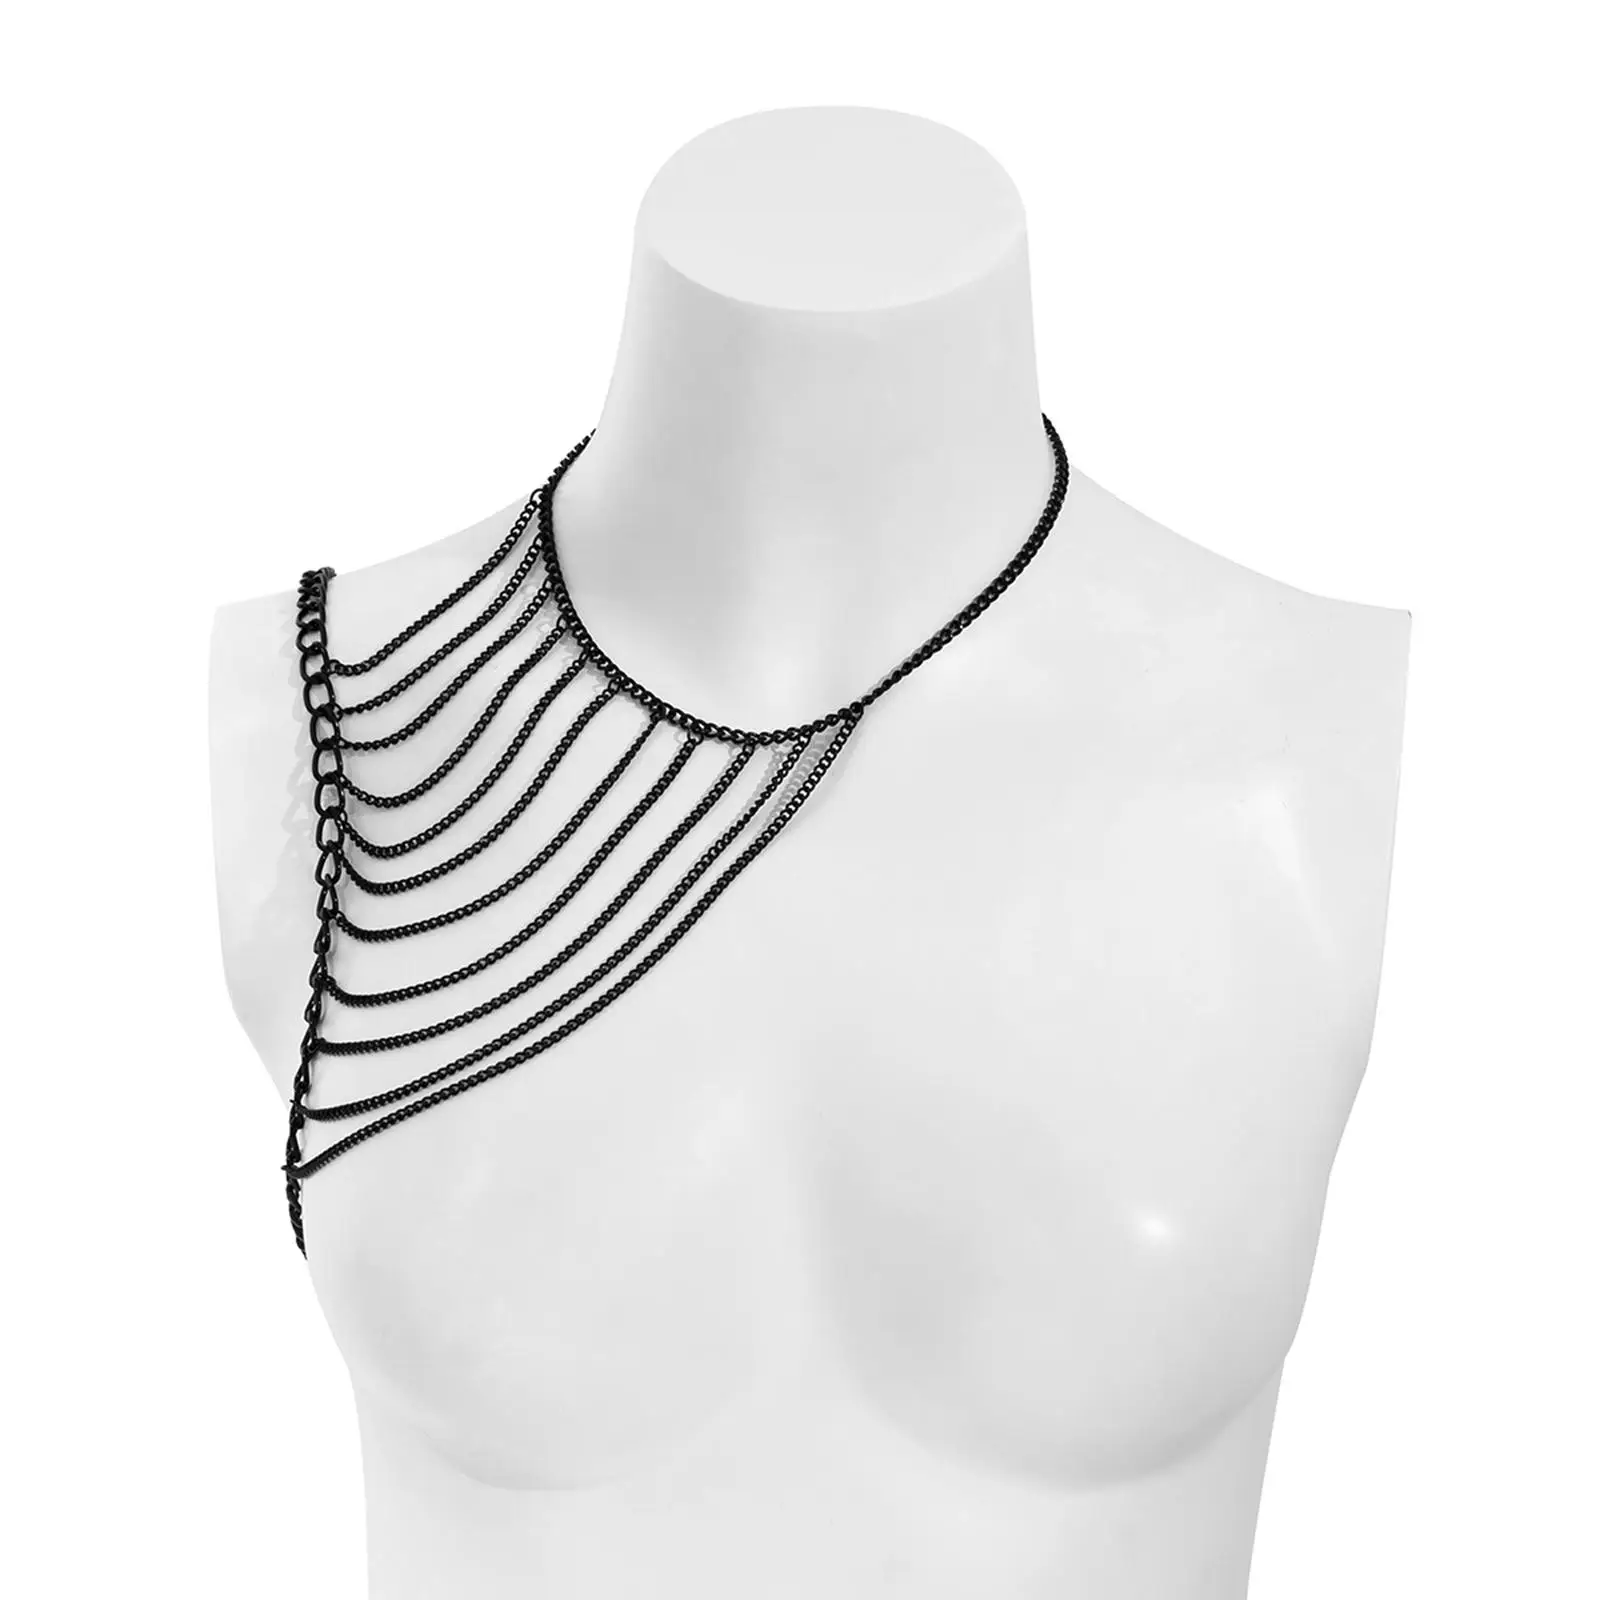 Choker Necklace Shoulder Tassel Chain Black for Club Bar Punk Jewelry Rock Choker